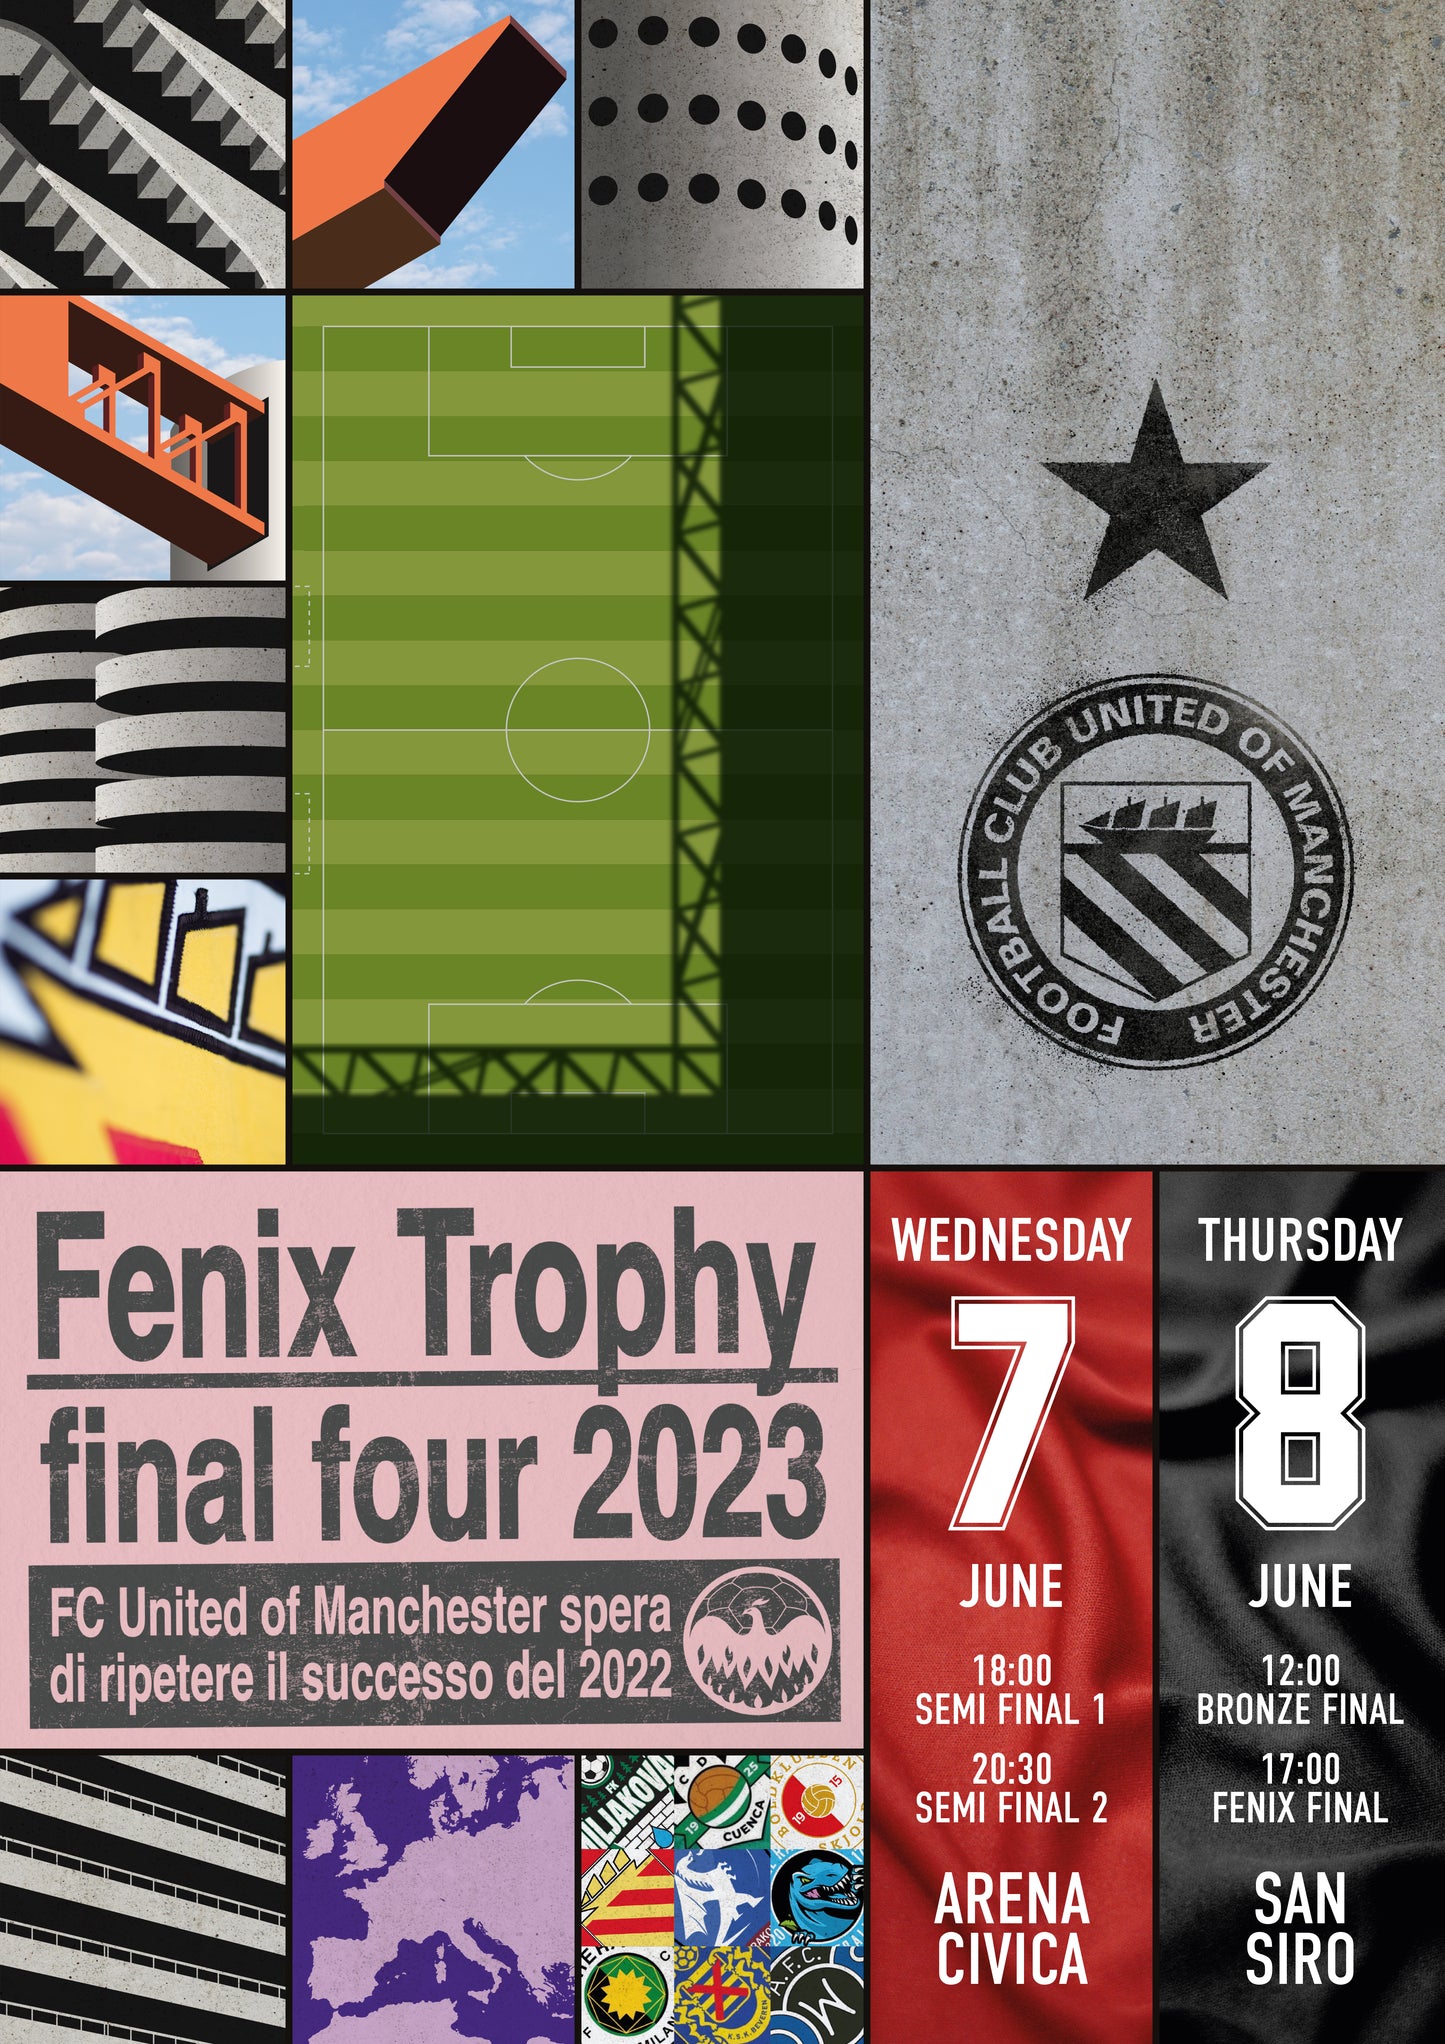 Fenix Trophy Final 4 Souvenir Match Poster - Milan 2023 - A4 Limited Edition Print (Unframed)